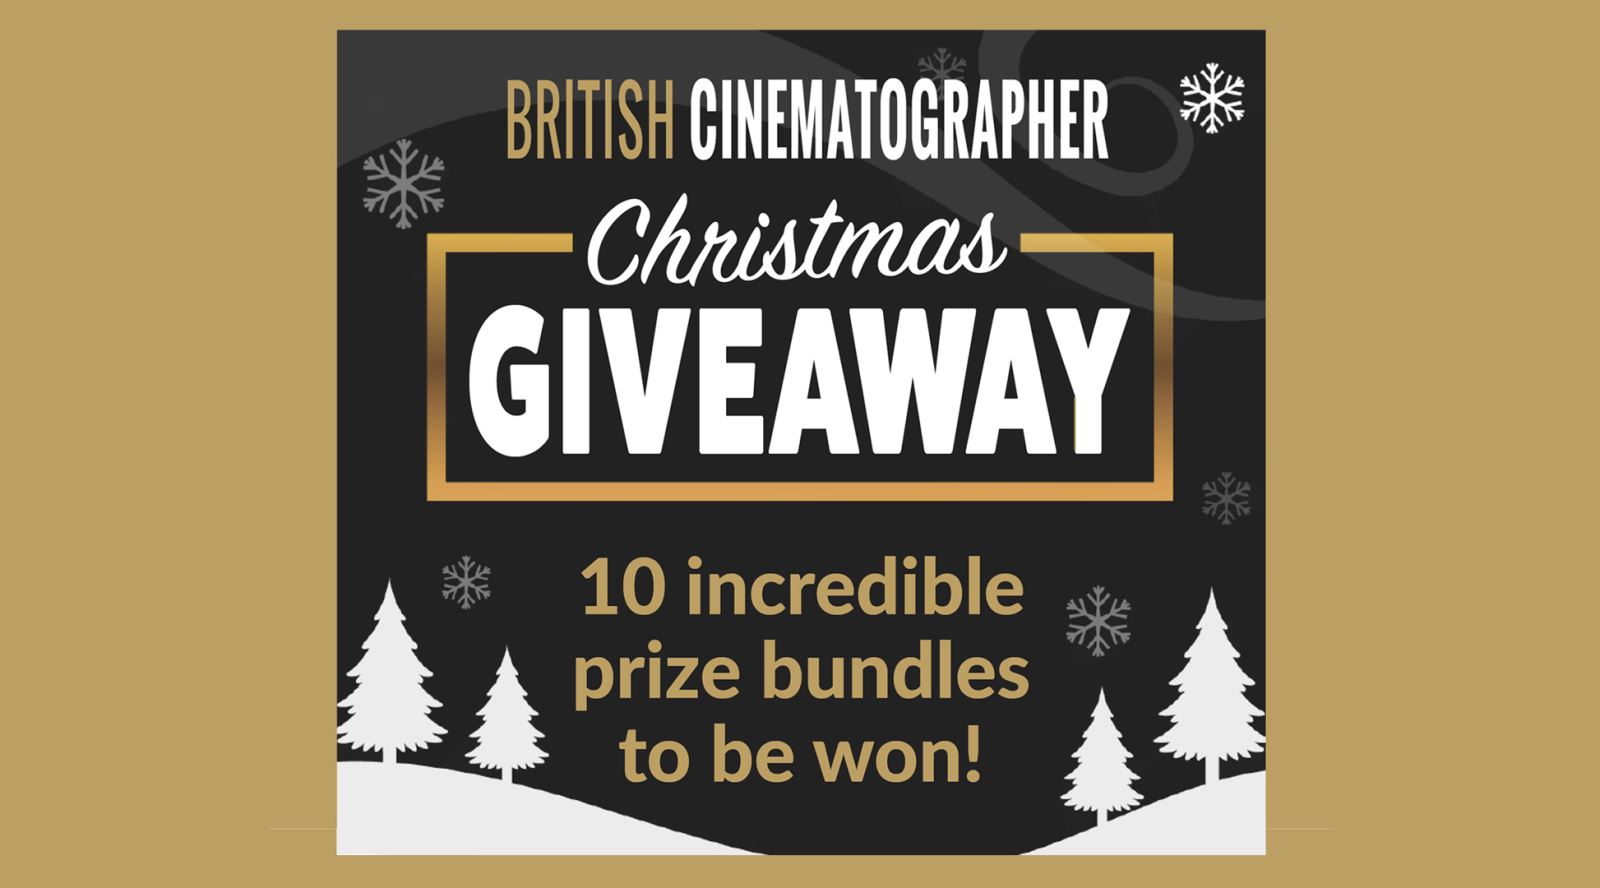 British Cinematographer's Christmas Competition